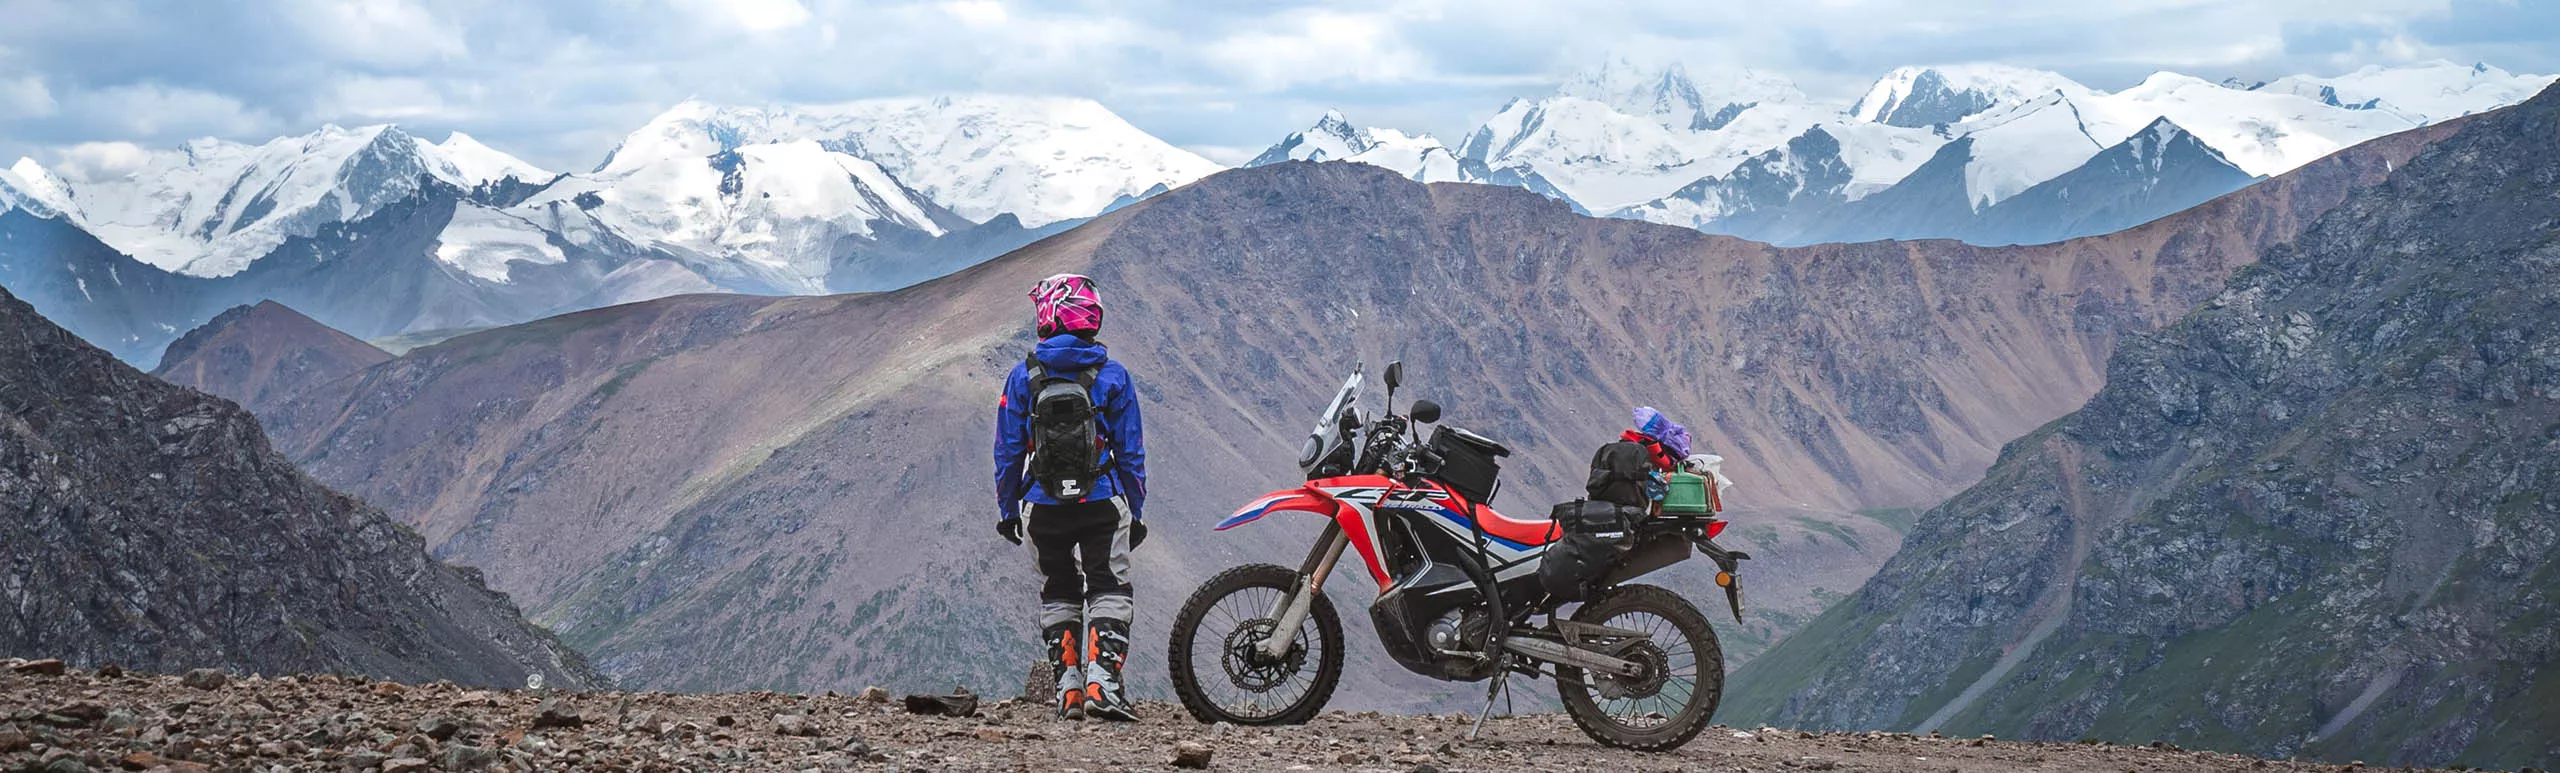 Кыргызстан - по диким местам Тянь Шаня на мотоциклах